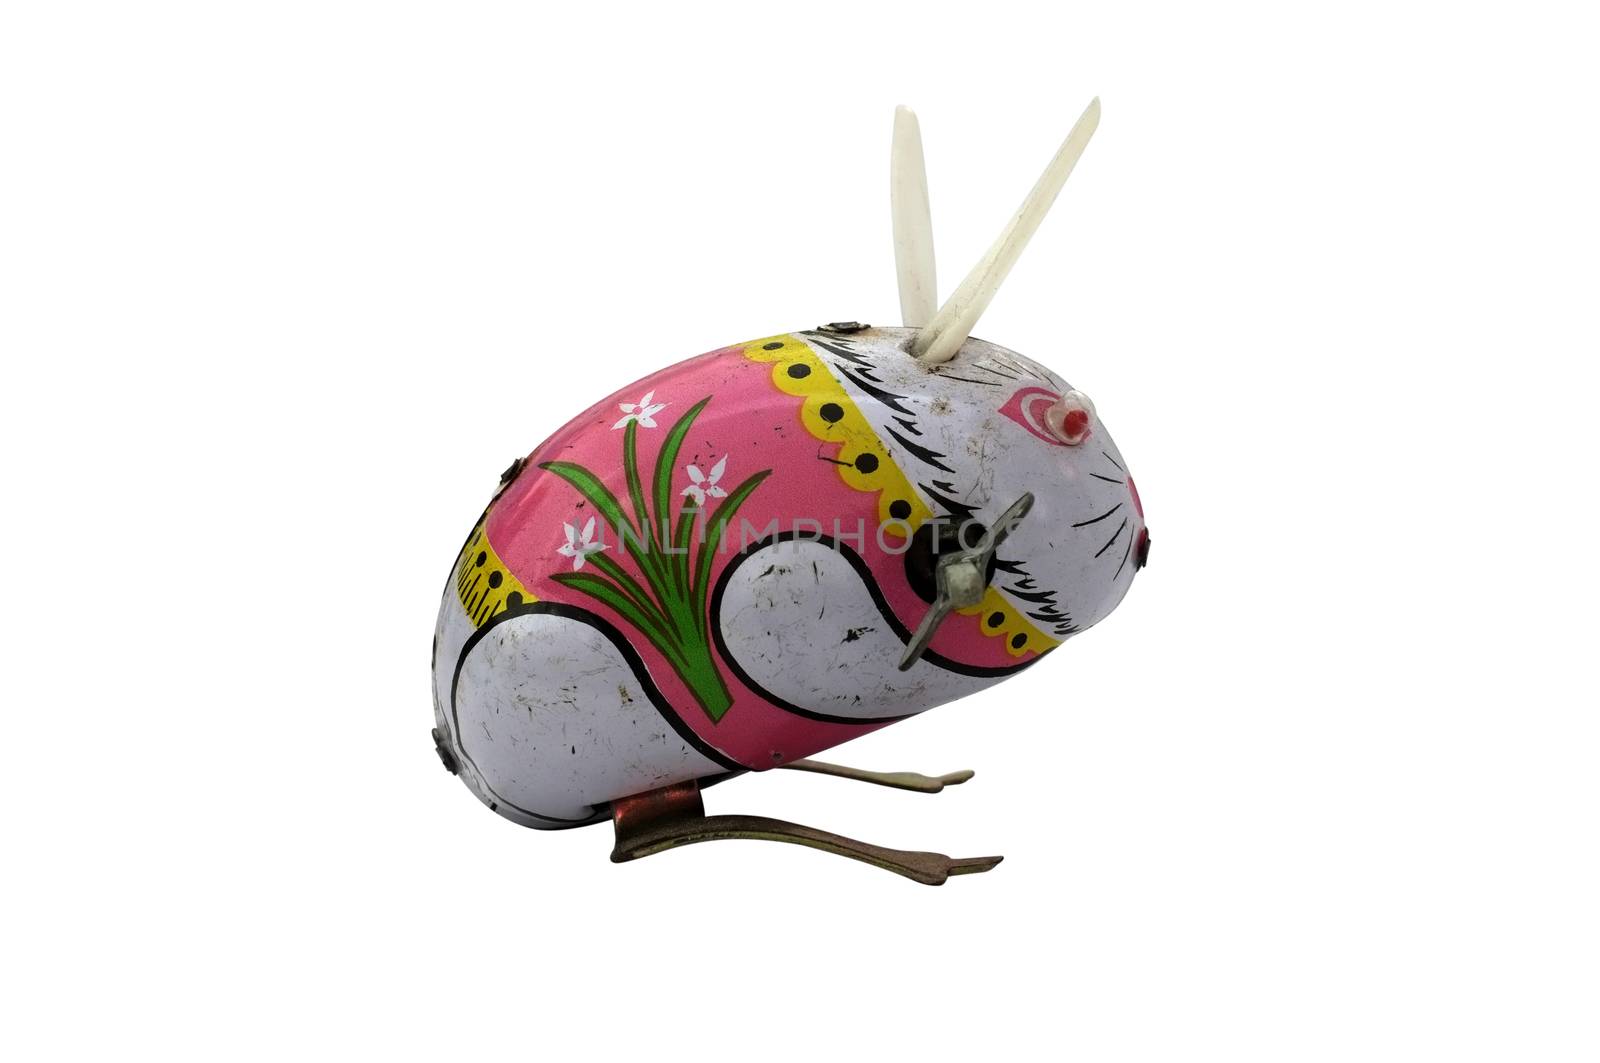 Wind-up vintage toy rabbit by Hepjam